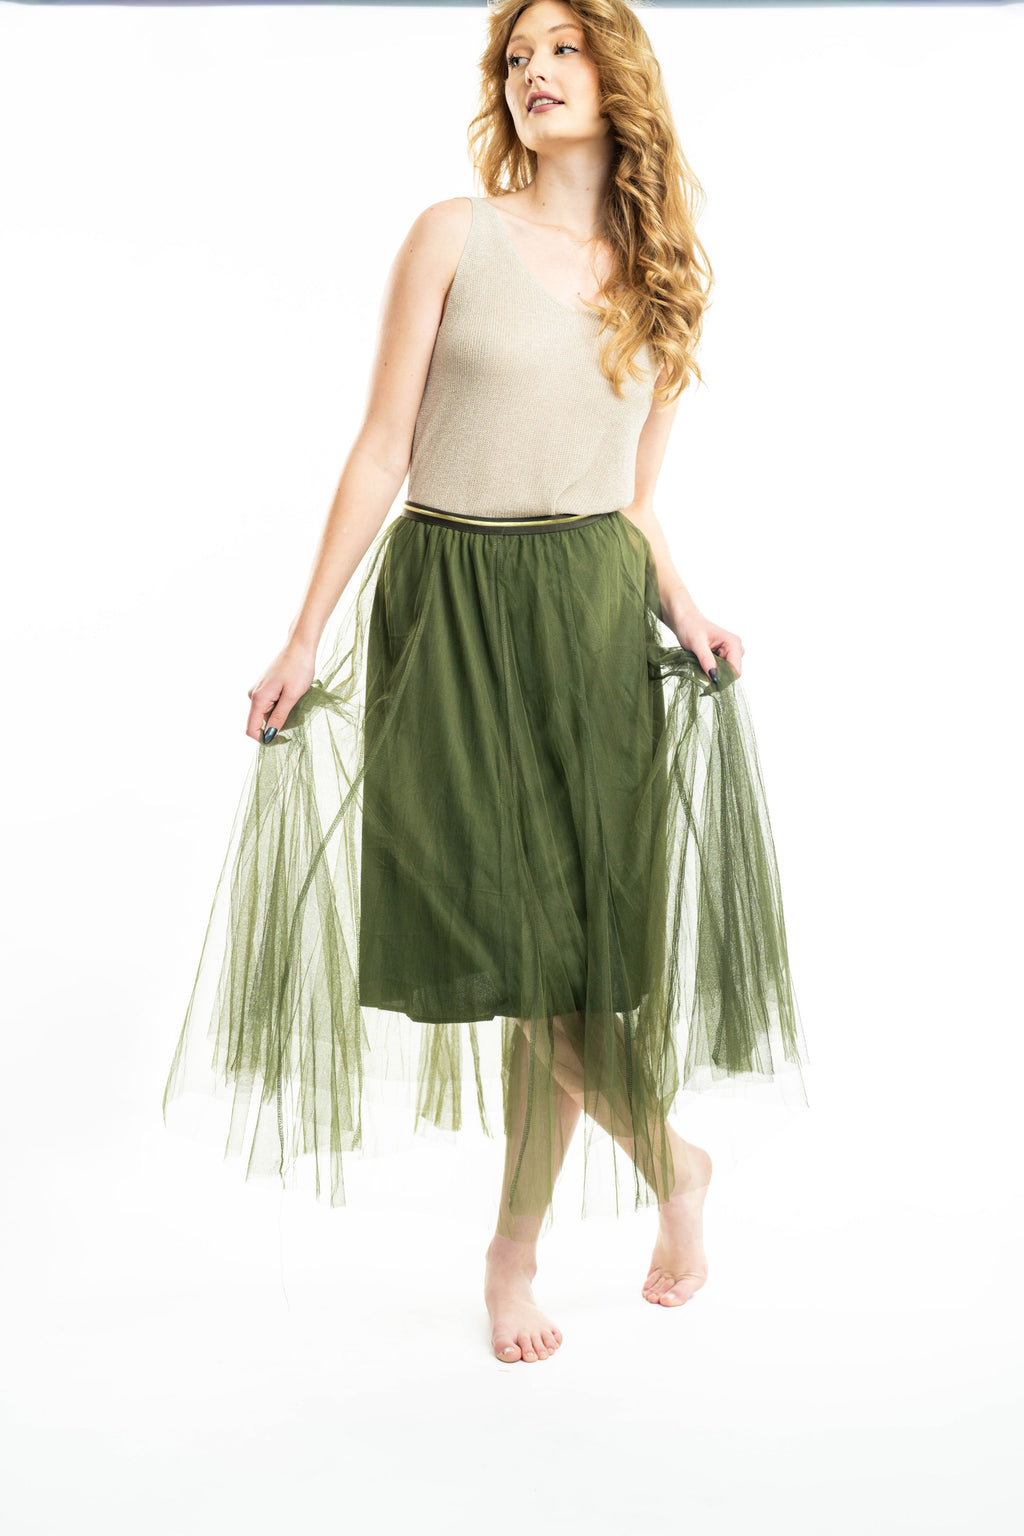 DP S23 Olive Tule Skirt